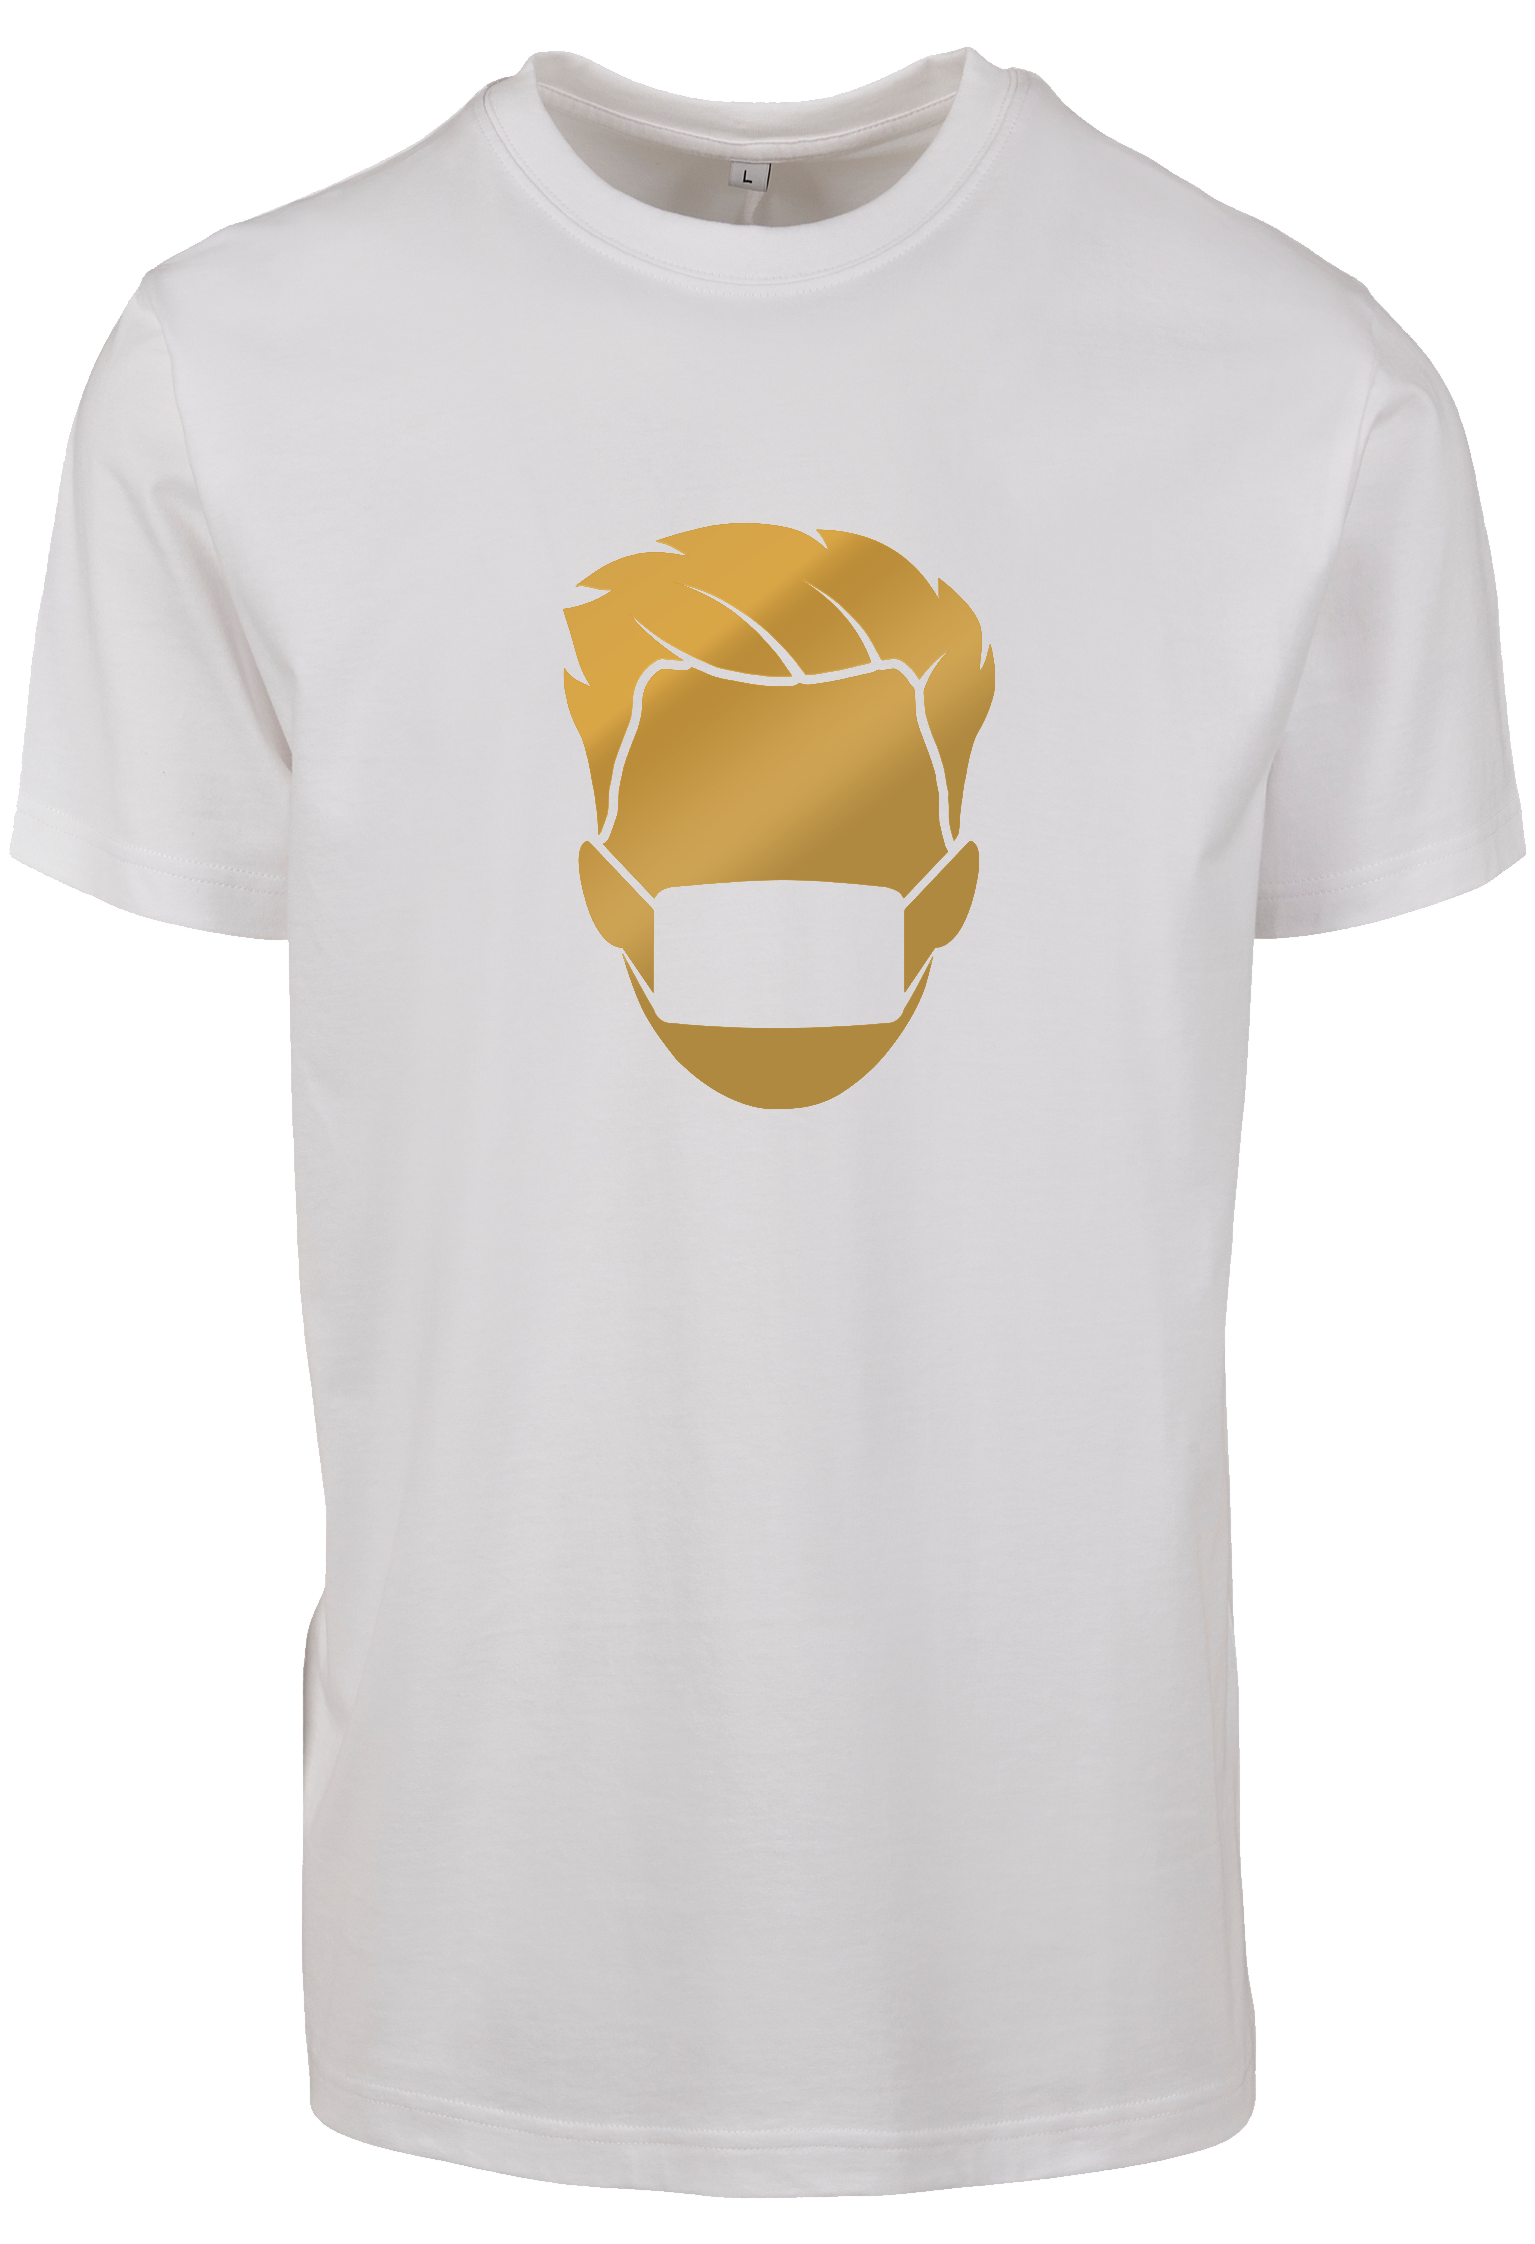 Goldzappa white T-Shirt